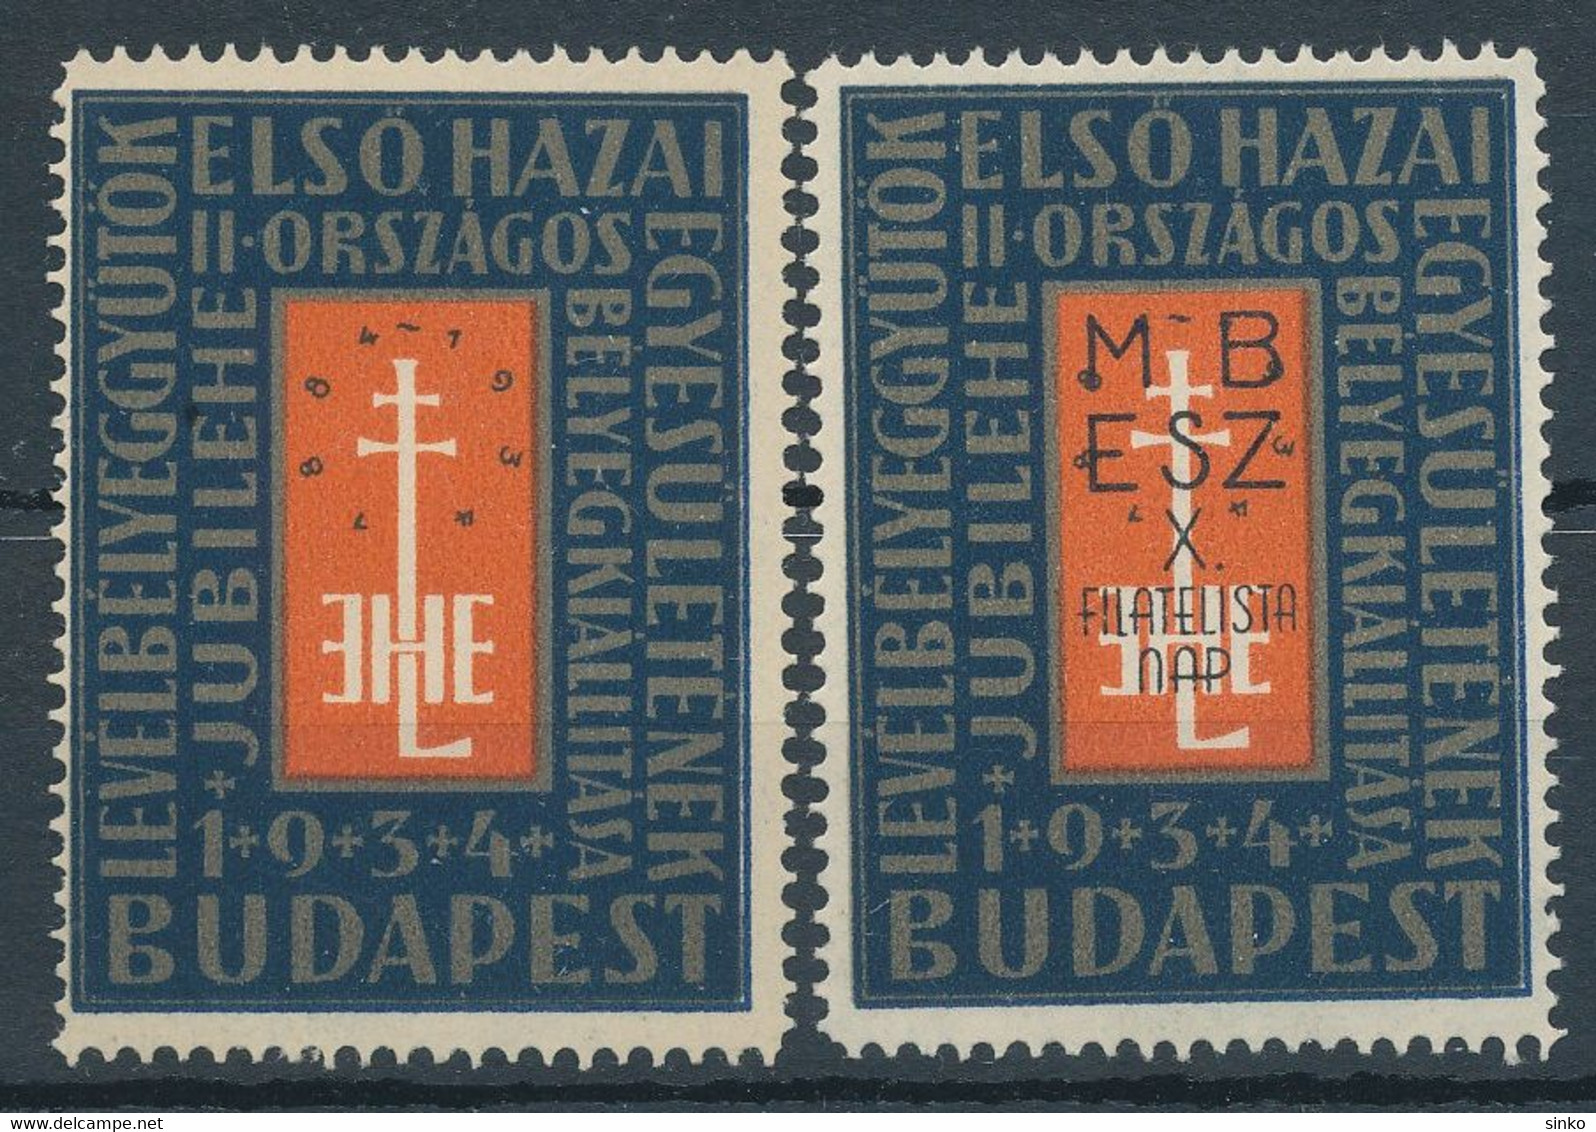 1934. Jubilehe Stamp Exhibition Budapest - Feuillets Souvenir